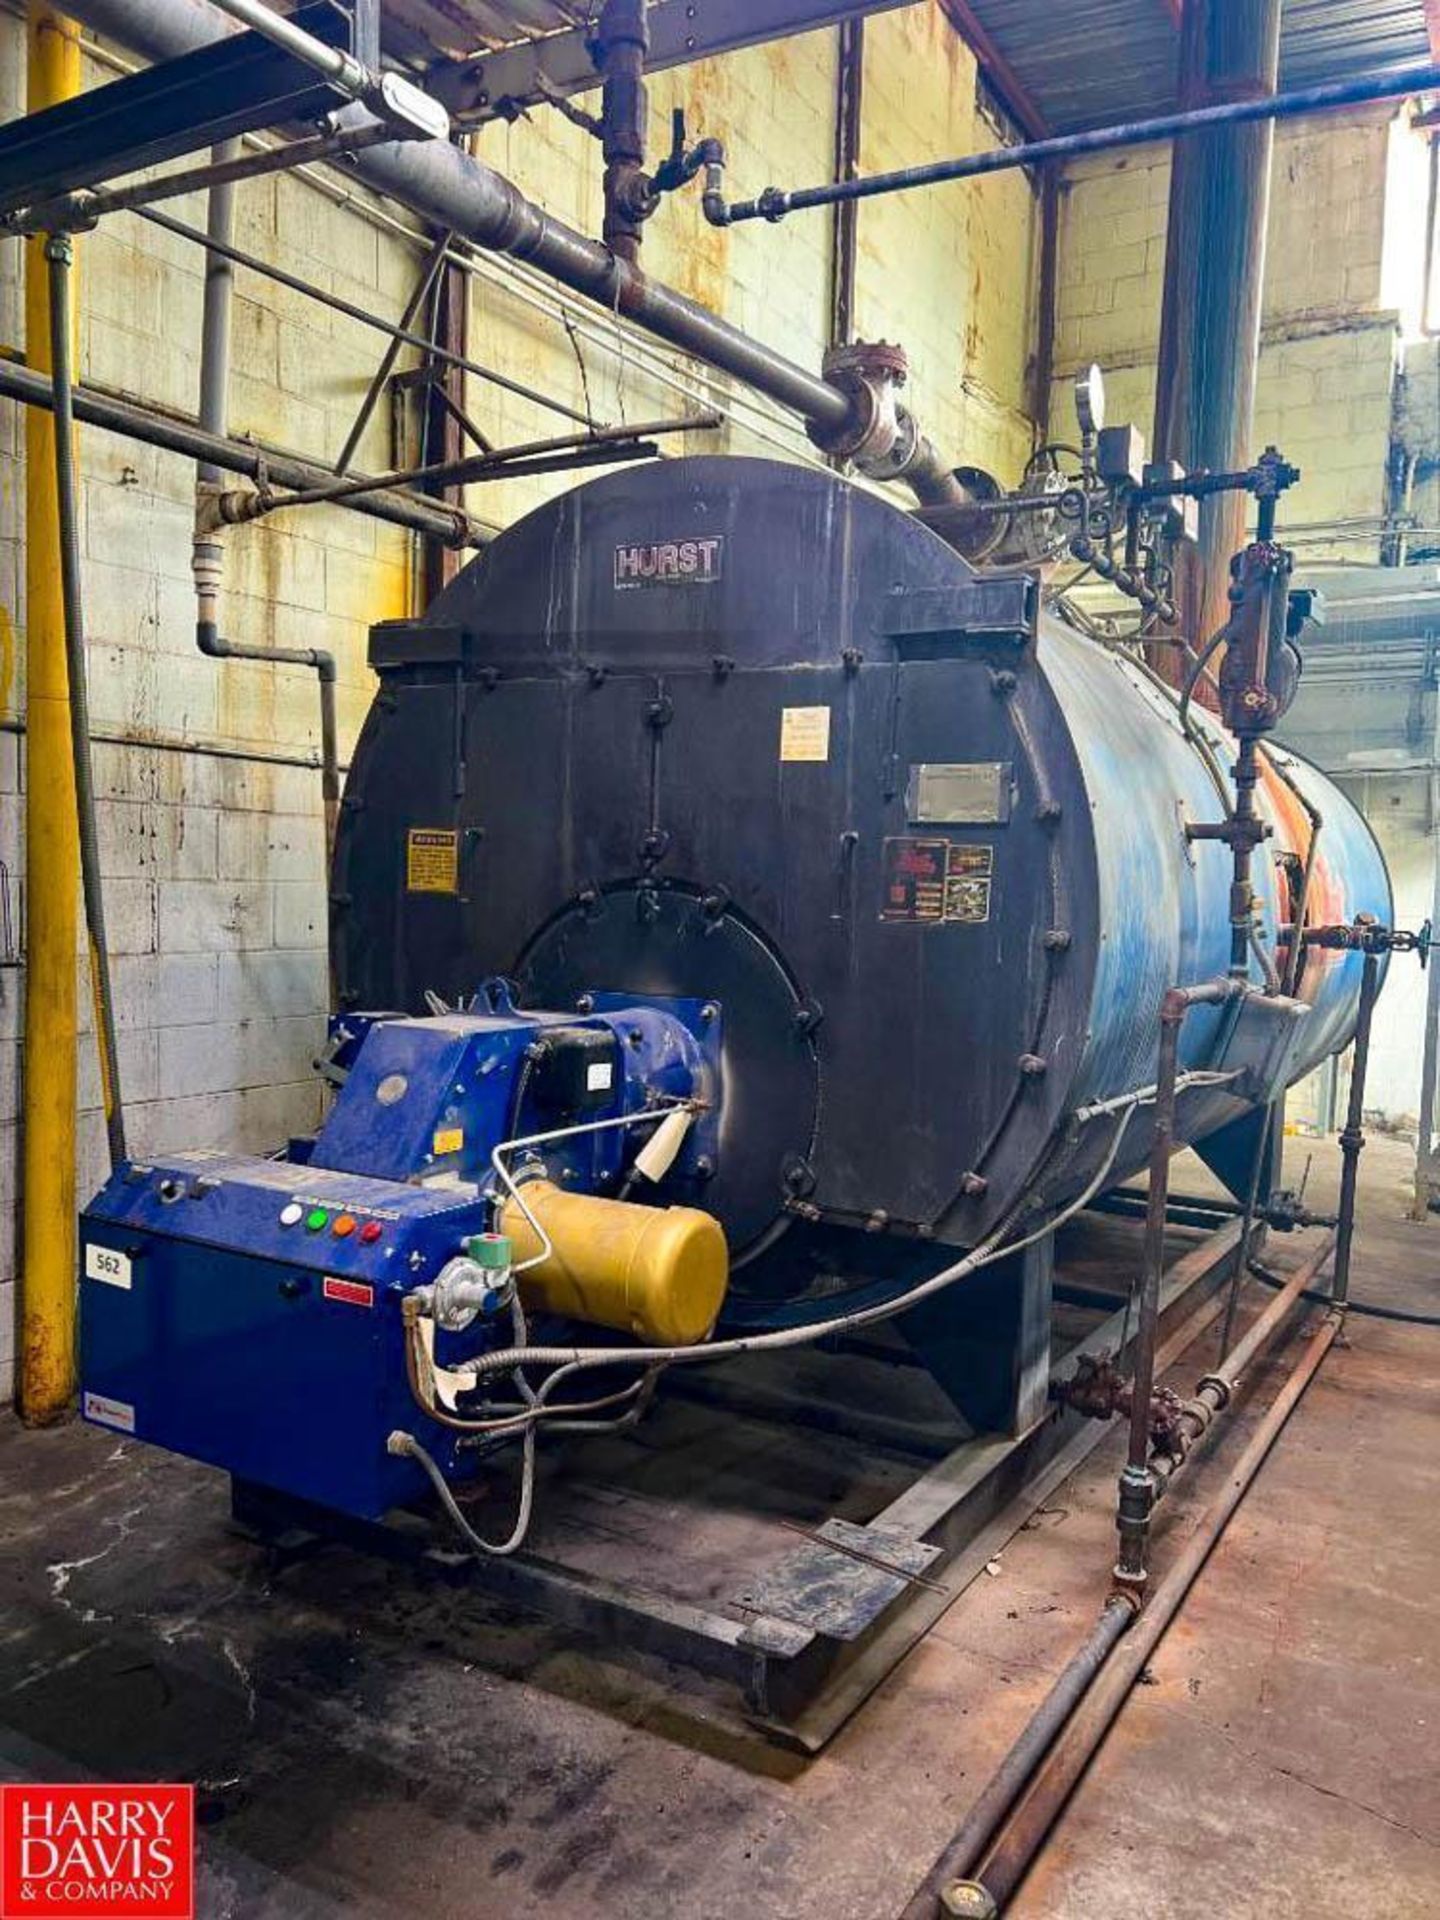 Hurst Boiler and Welding Gas-Oil Fired 150 PSI Boiler, Assembly No: AP-274070, S/N: S1000-150-102